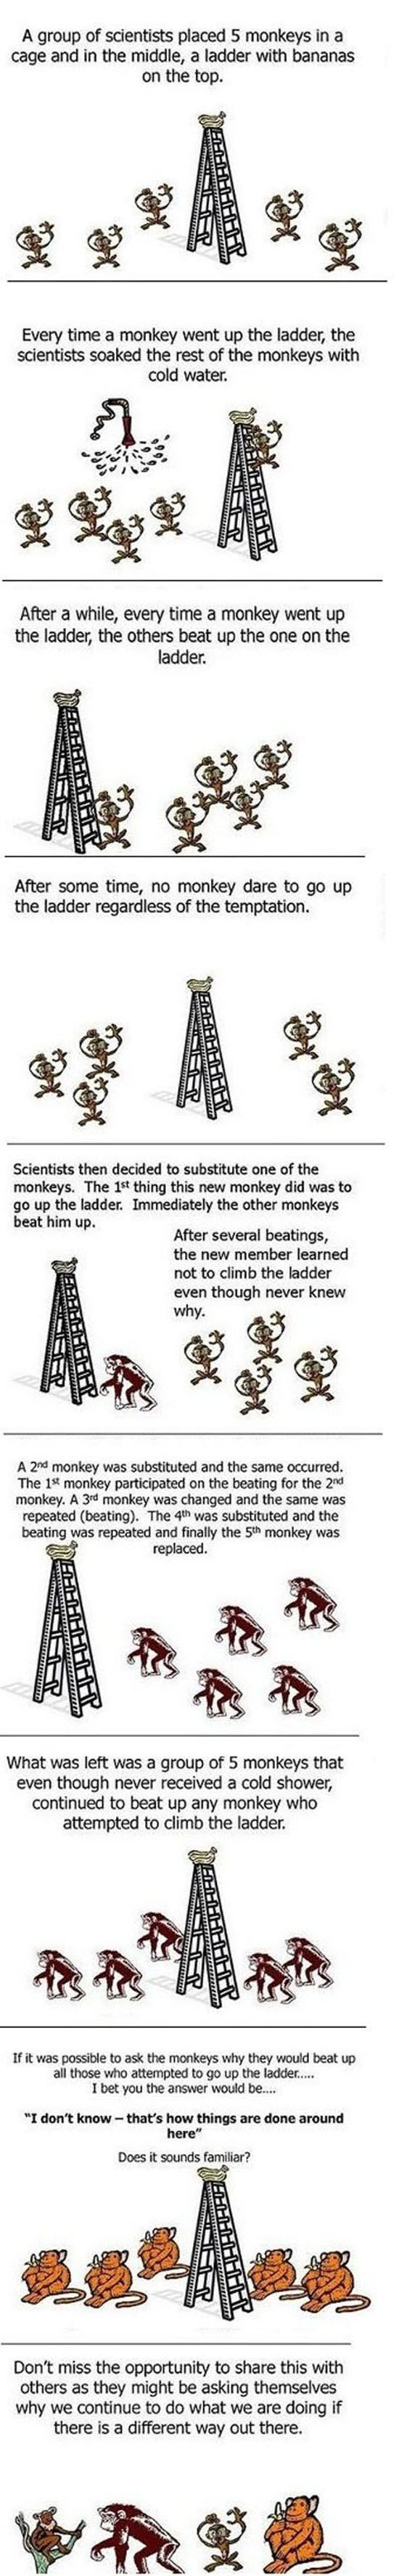 Curious Monkey Experiment